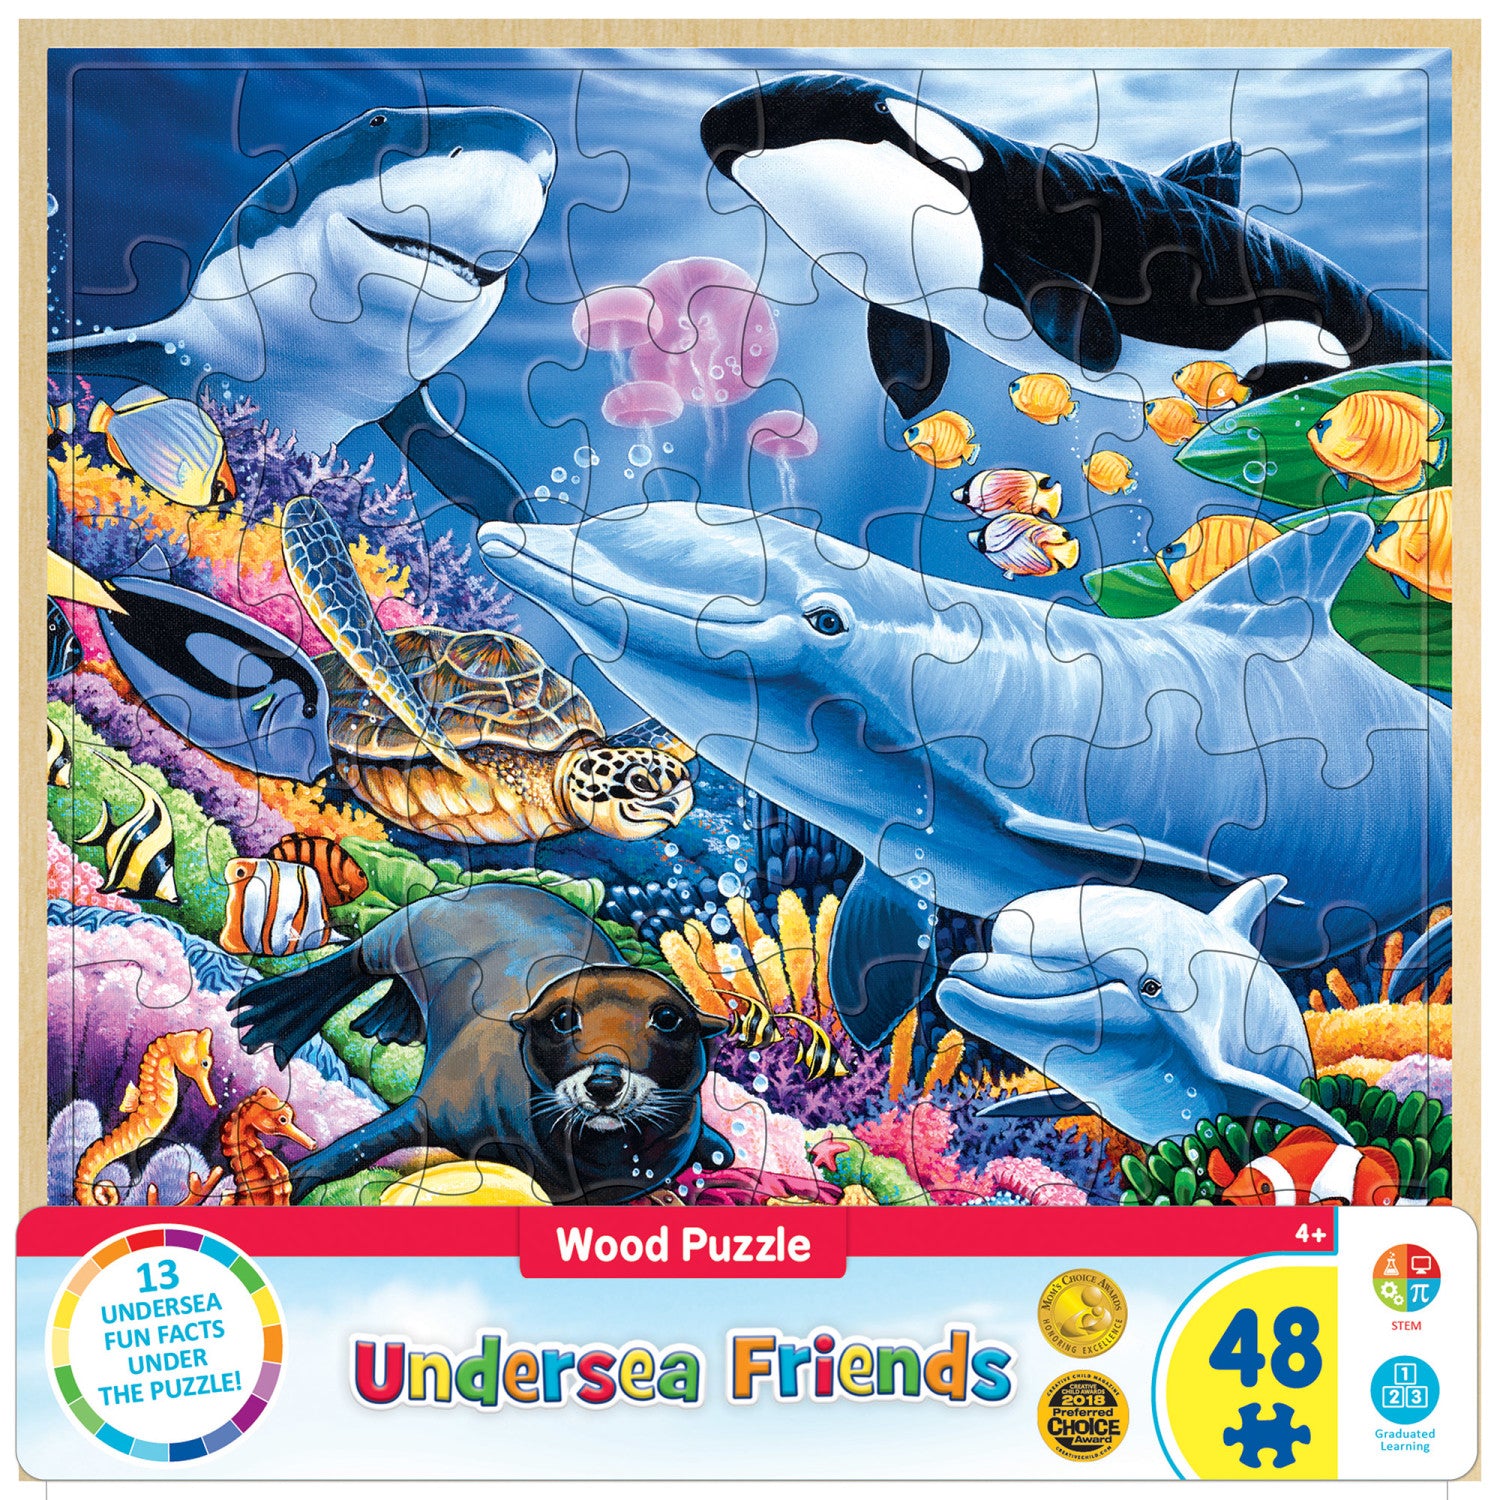 Wood Fun Facts - Undersea Friends 48 Piece Wood Jigsaw Puzzle